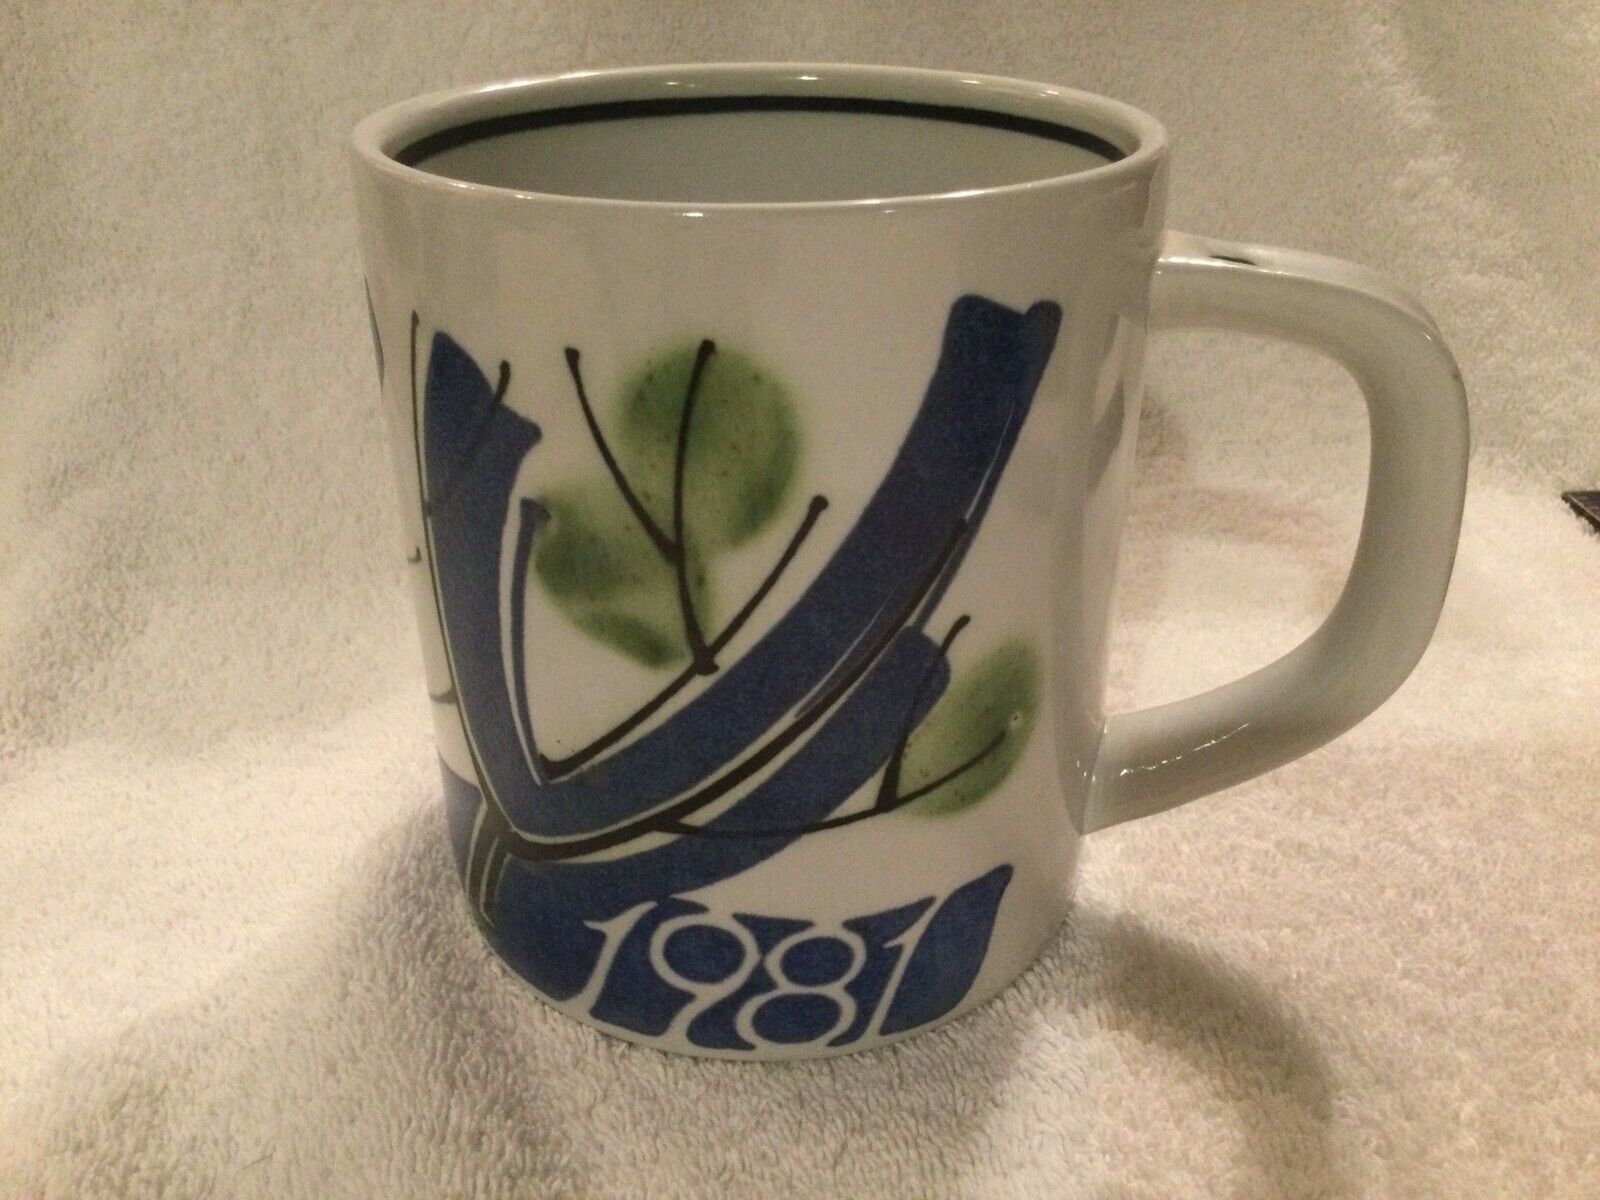 1981 Royal Copenhagen Anniversary Mug (Large)